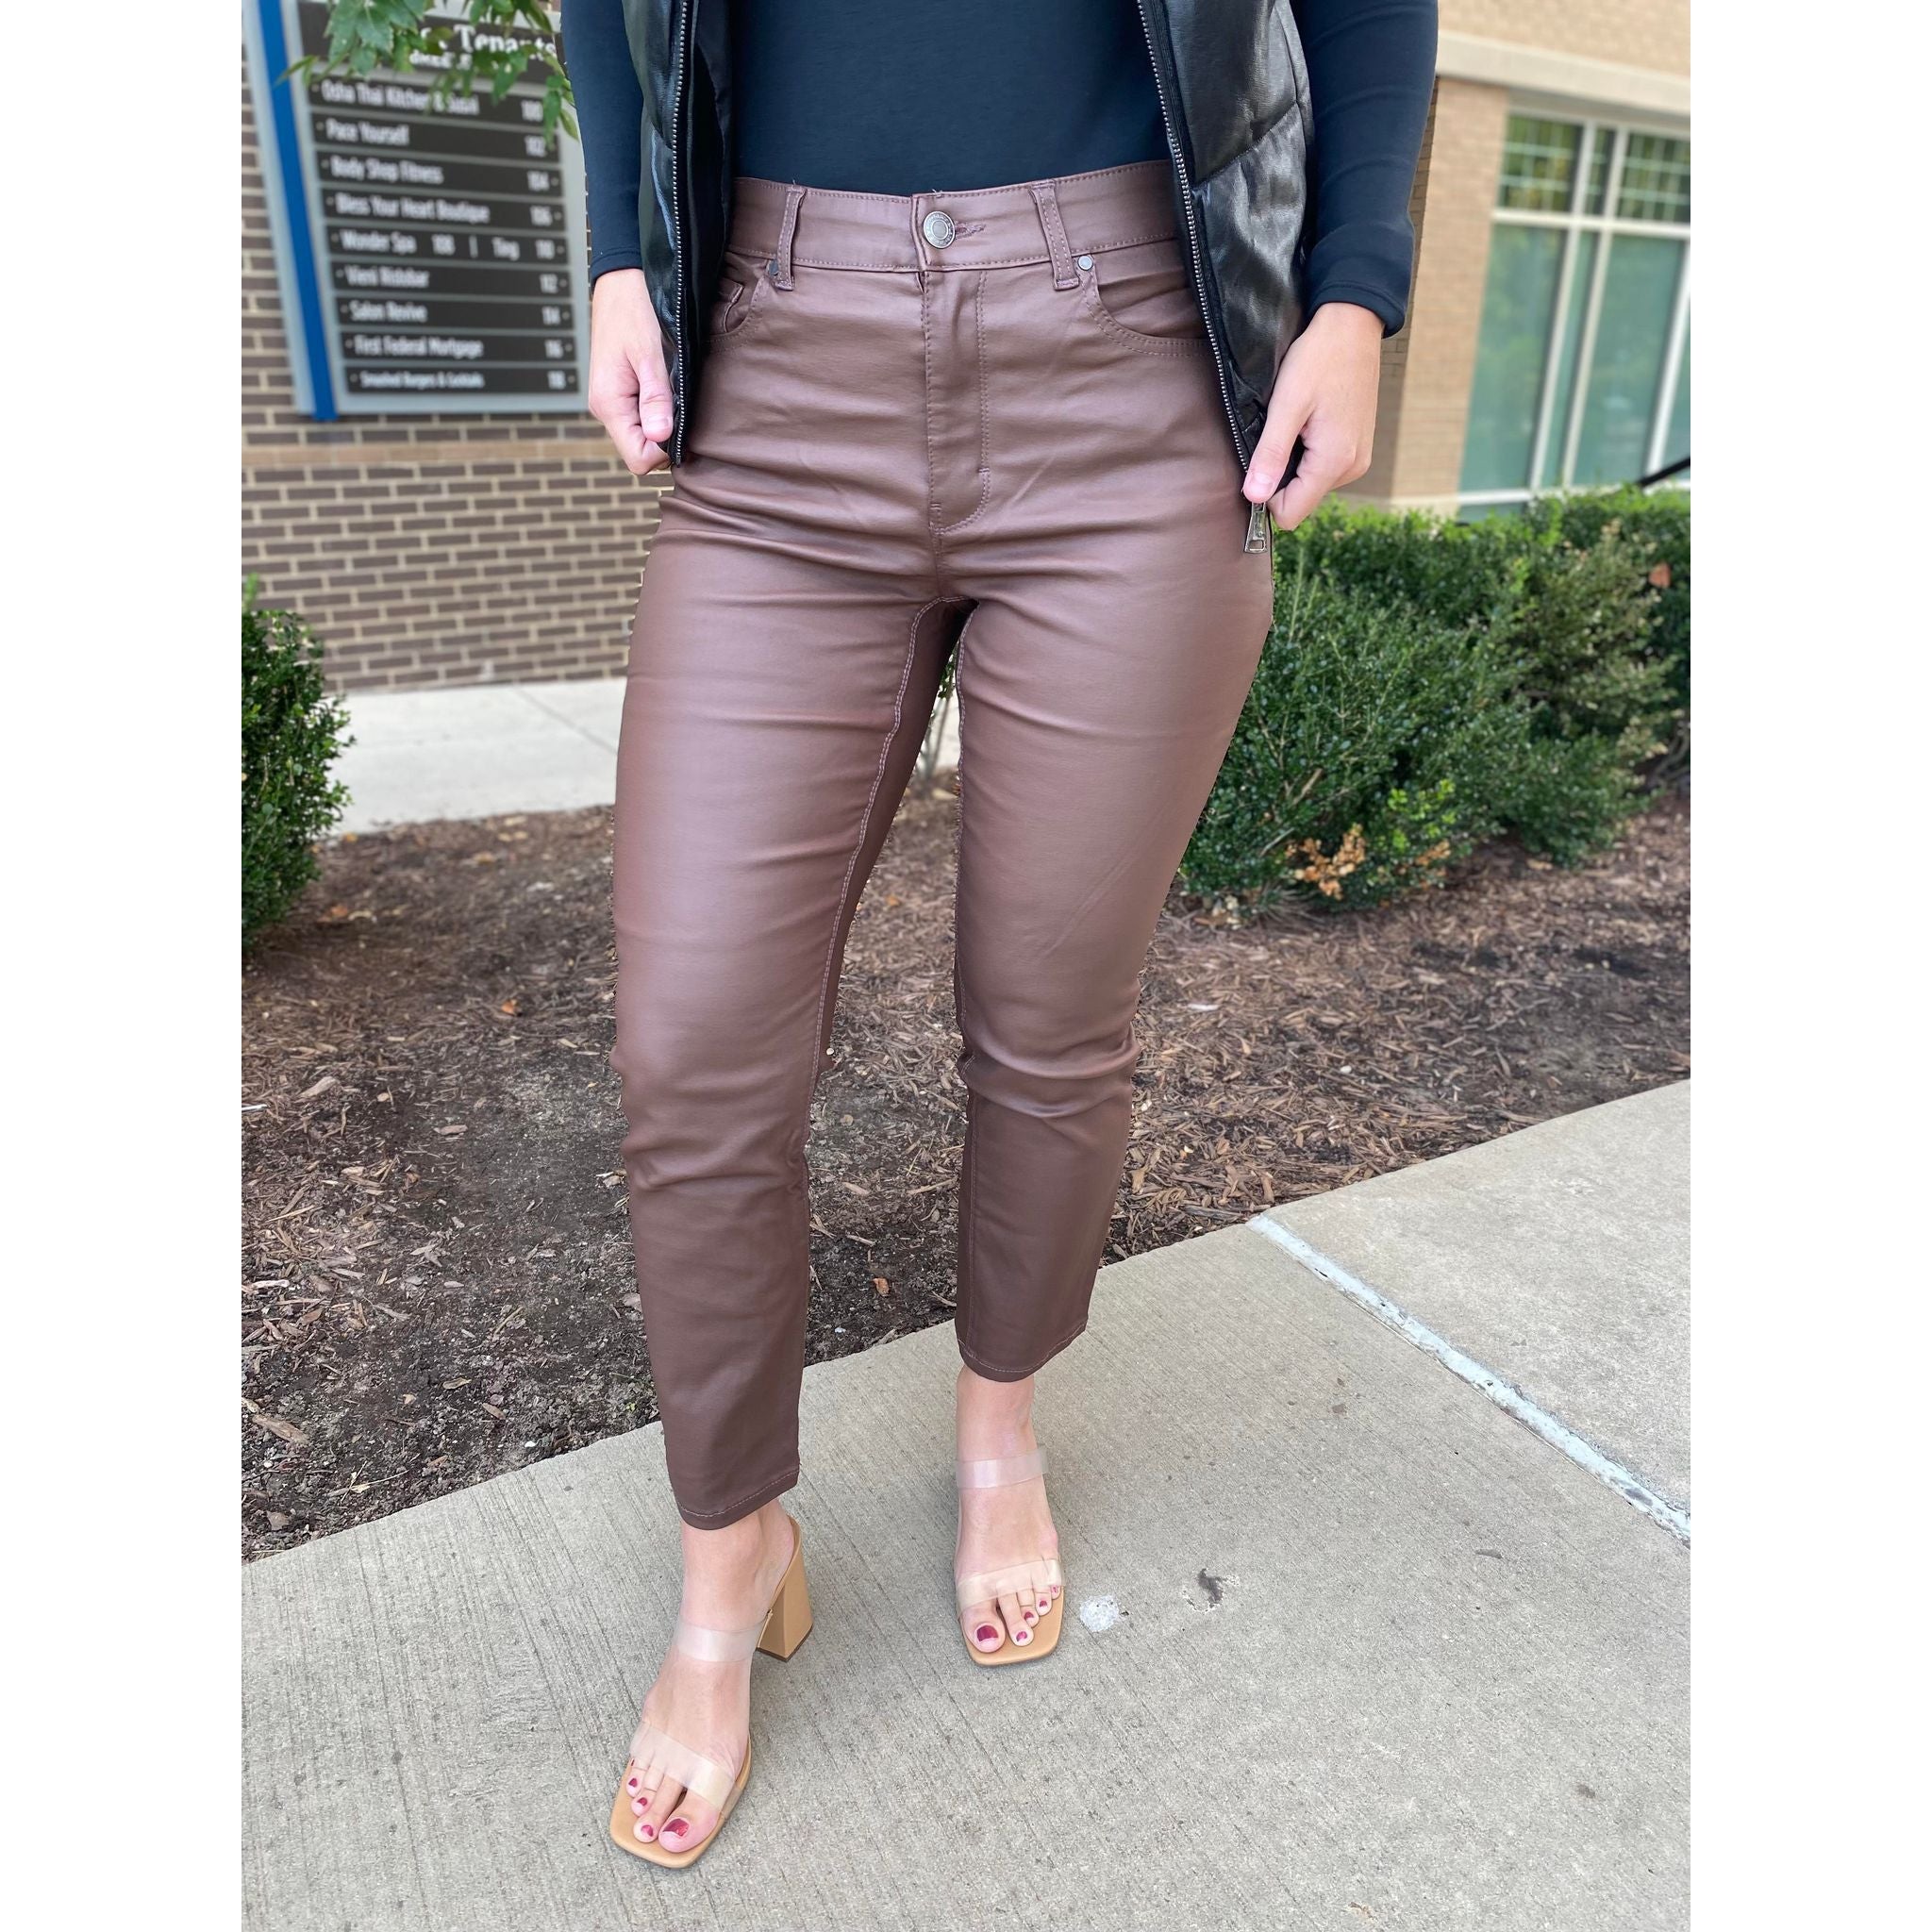 Pink PU Leather Cargo Pants Women Elastic Waist Leather Straight